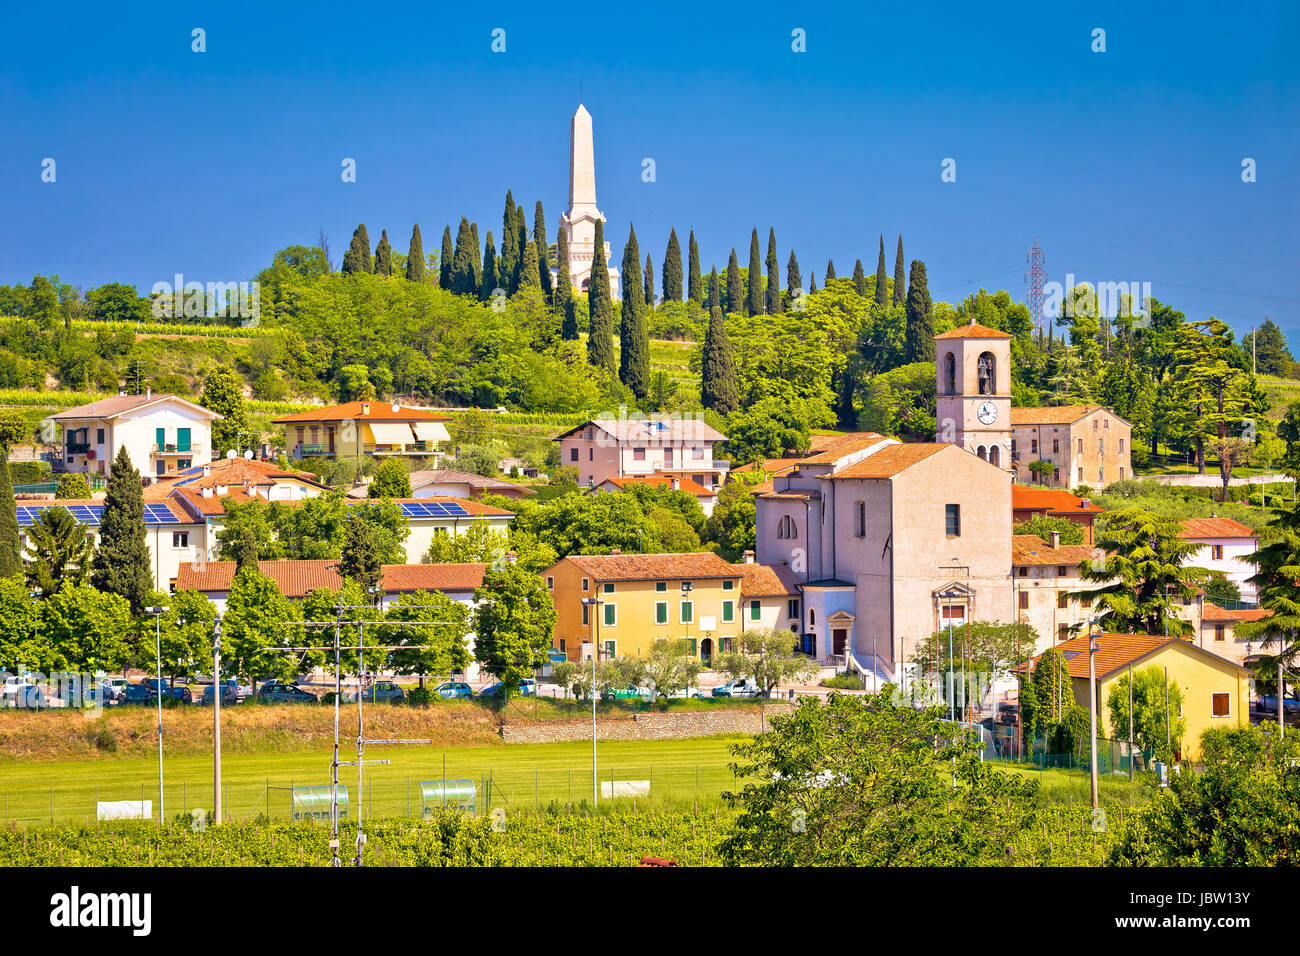 Village of Custoza idyllic landscape view, Veneto region of Italy Stock Photo